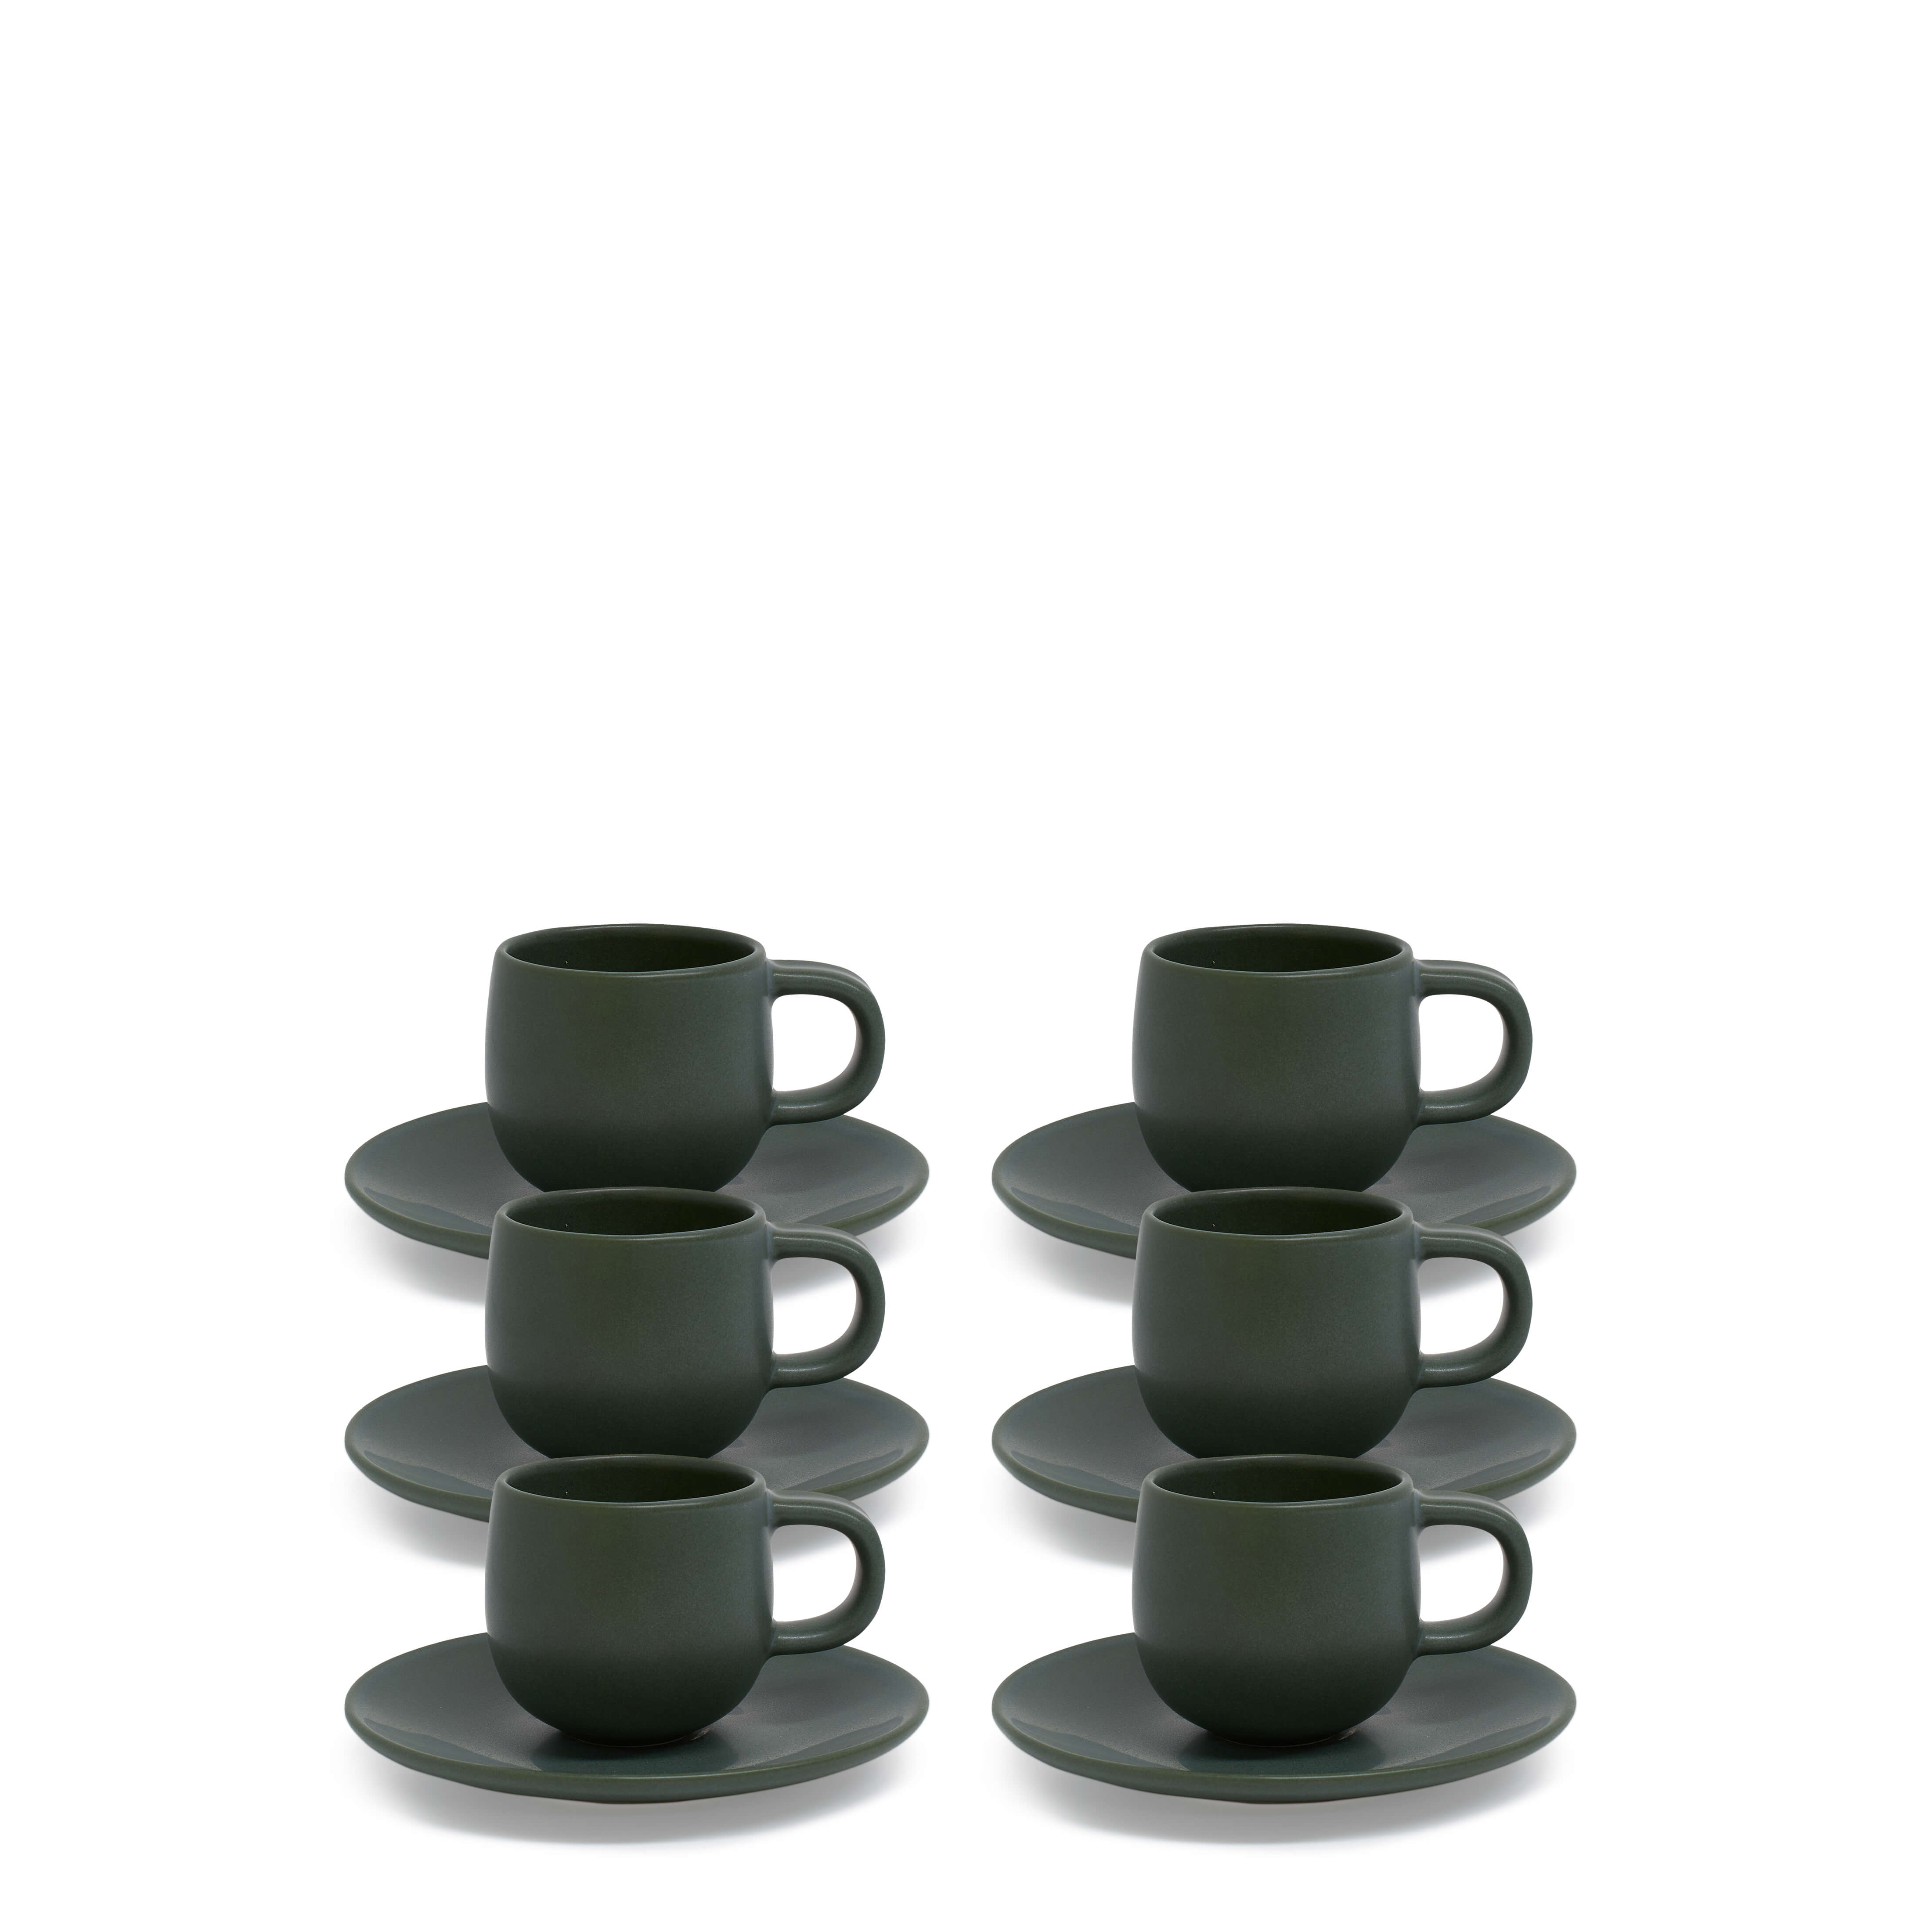 Hue Espresso Cups & Saucers 85mL - Set of 6 - Black – salt&pepper